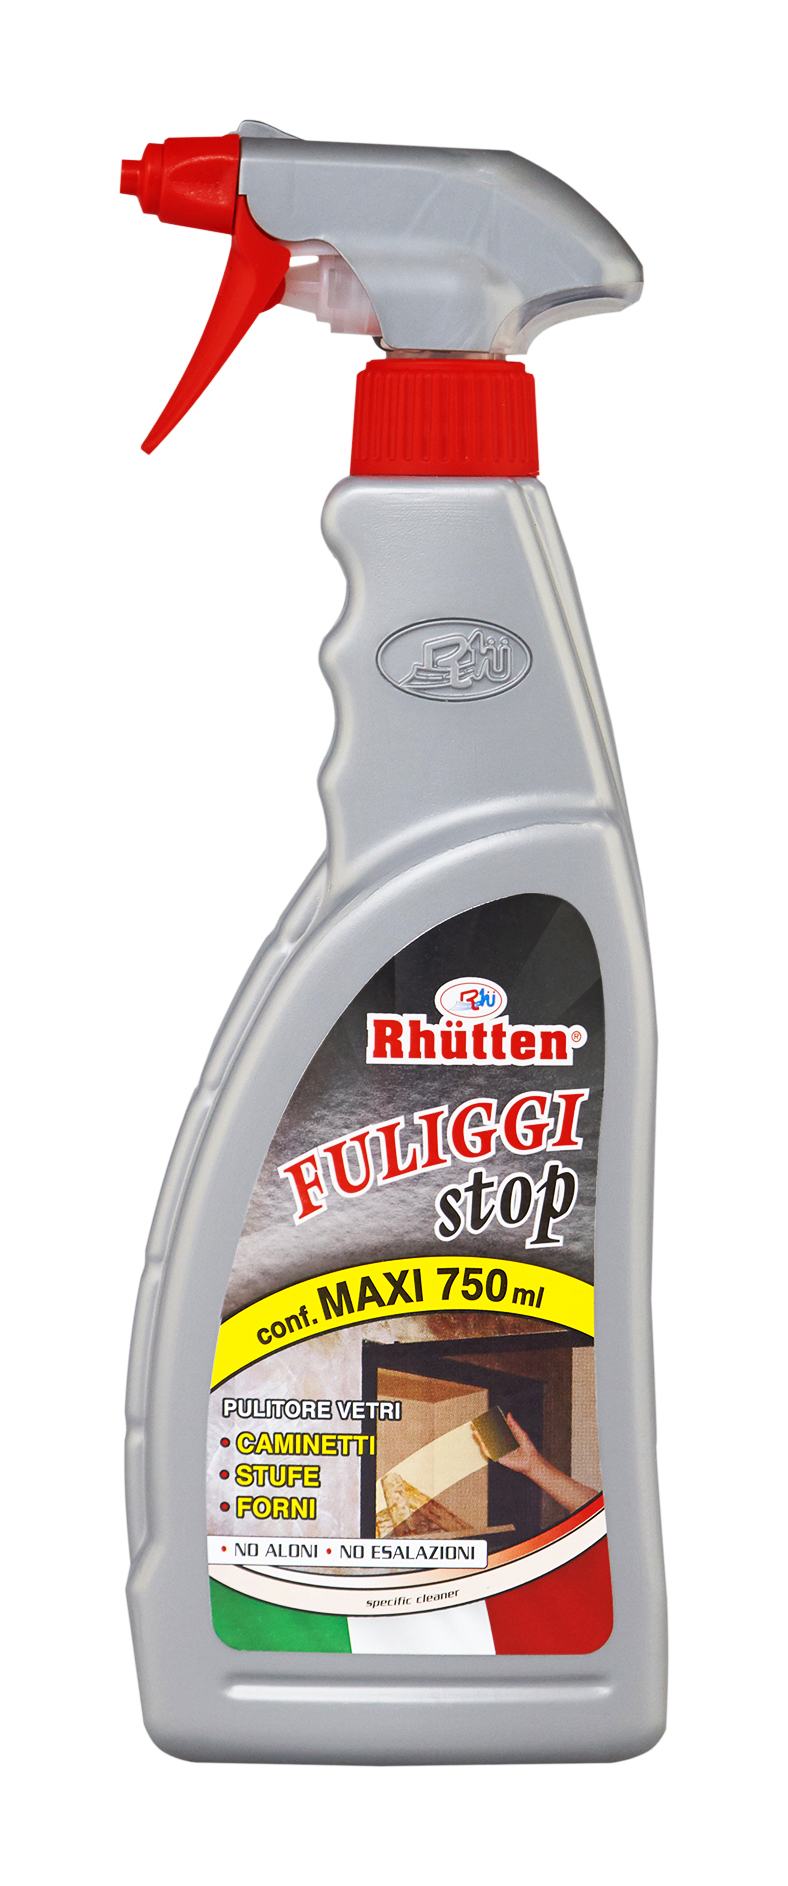 Rhütten 180761 detergente per vetri Flacone spray 750 ml: prezzi e offerte